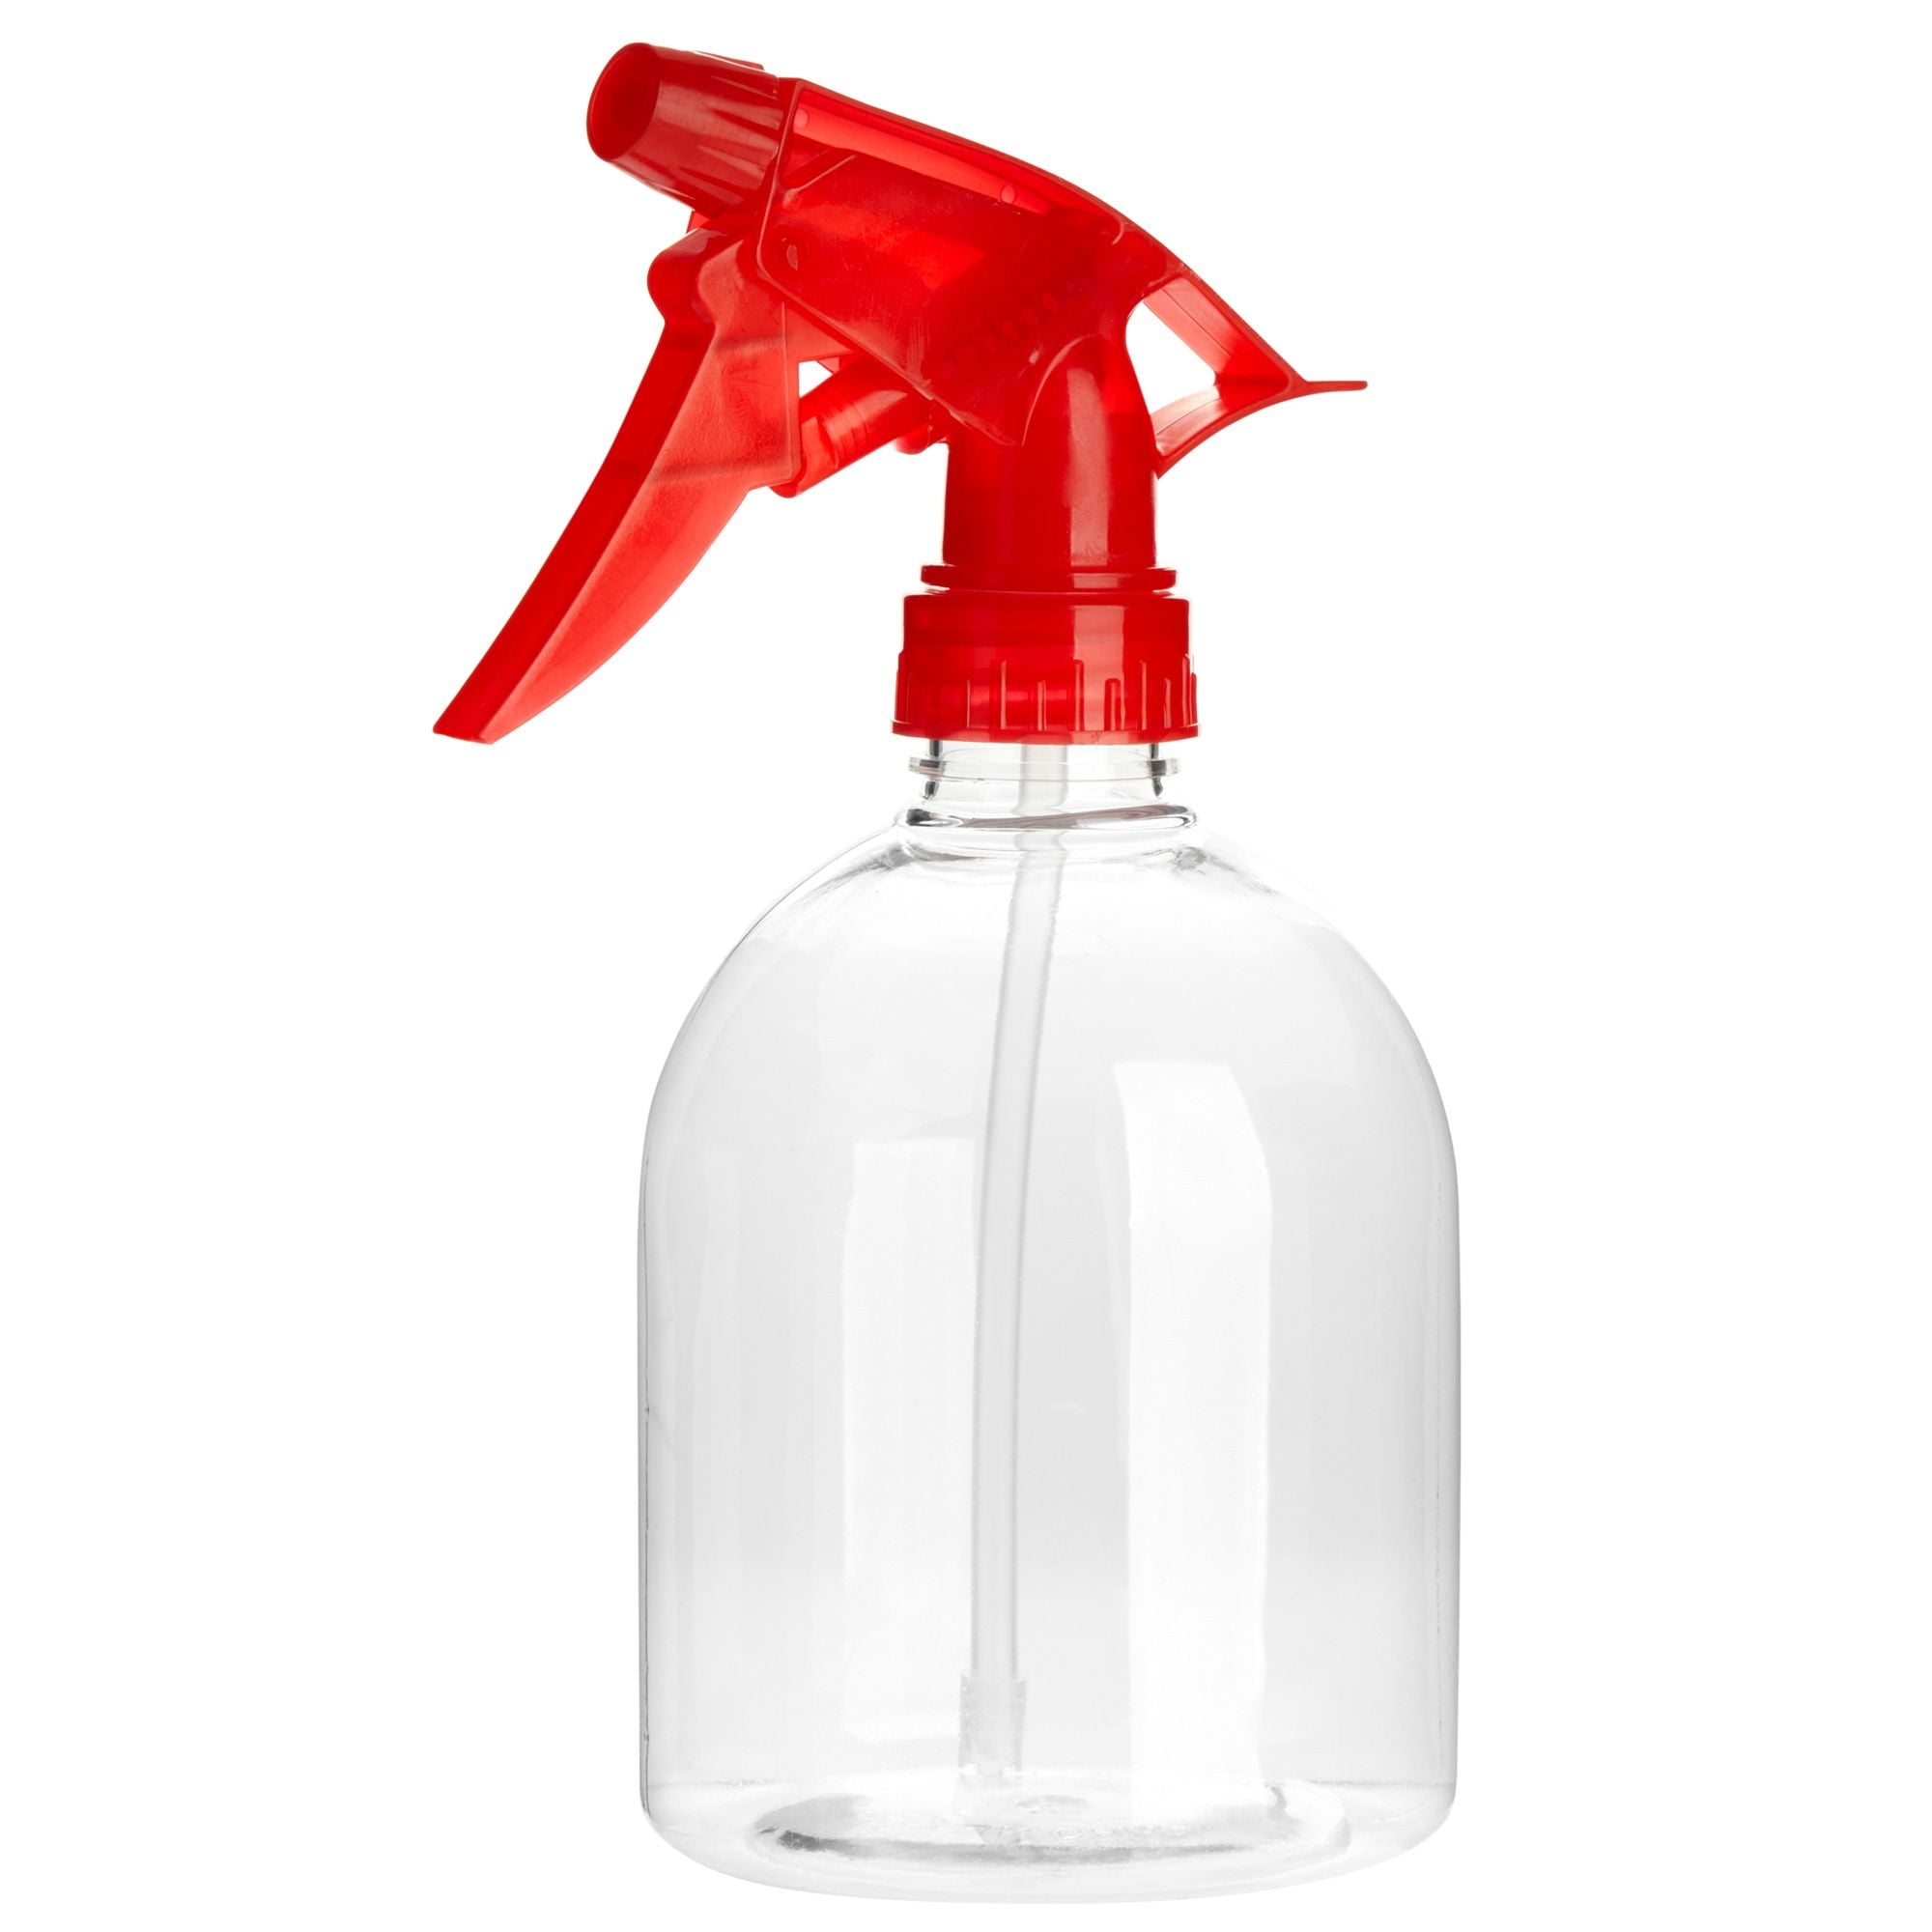 Eucasol Oferta  Cleaning supplies, Spray bottle